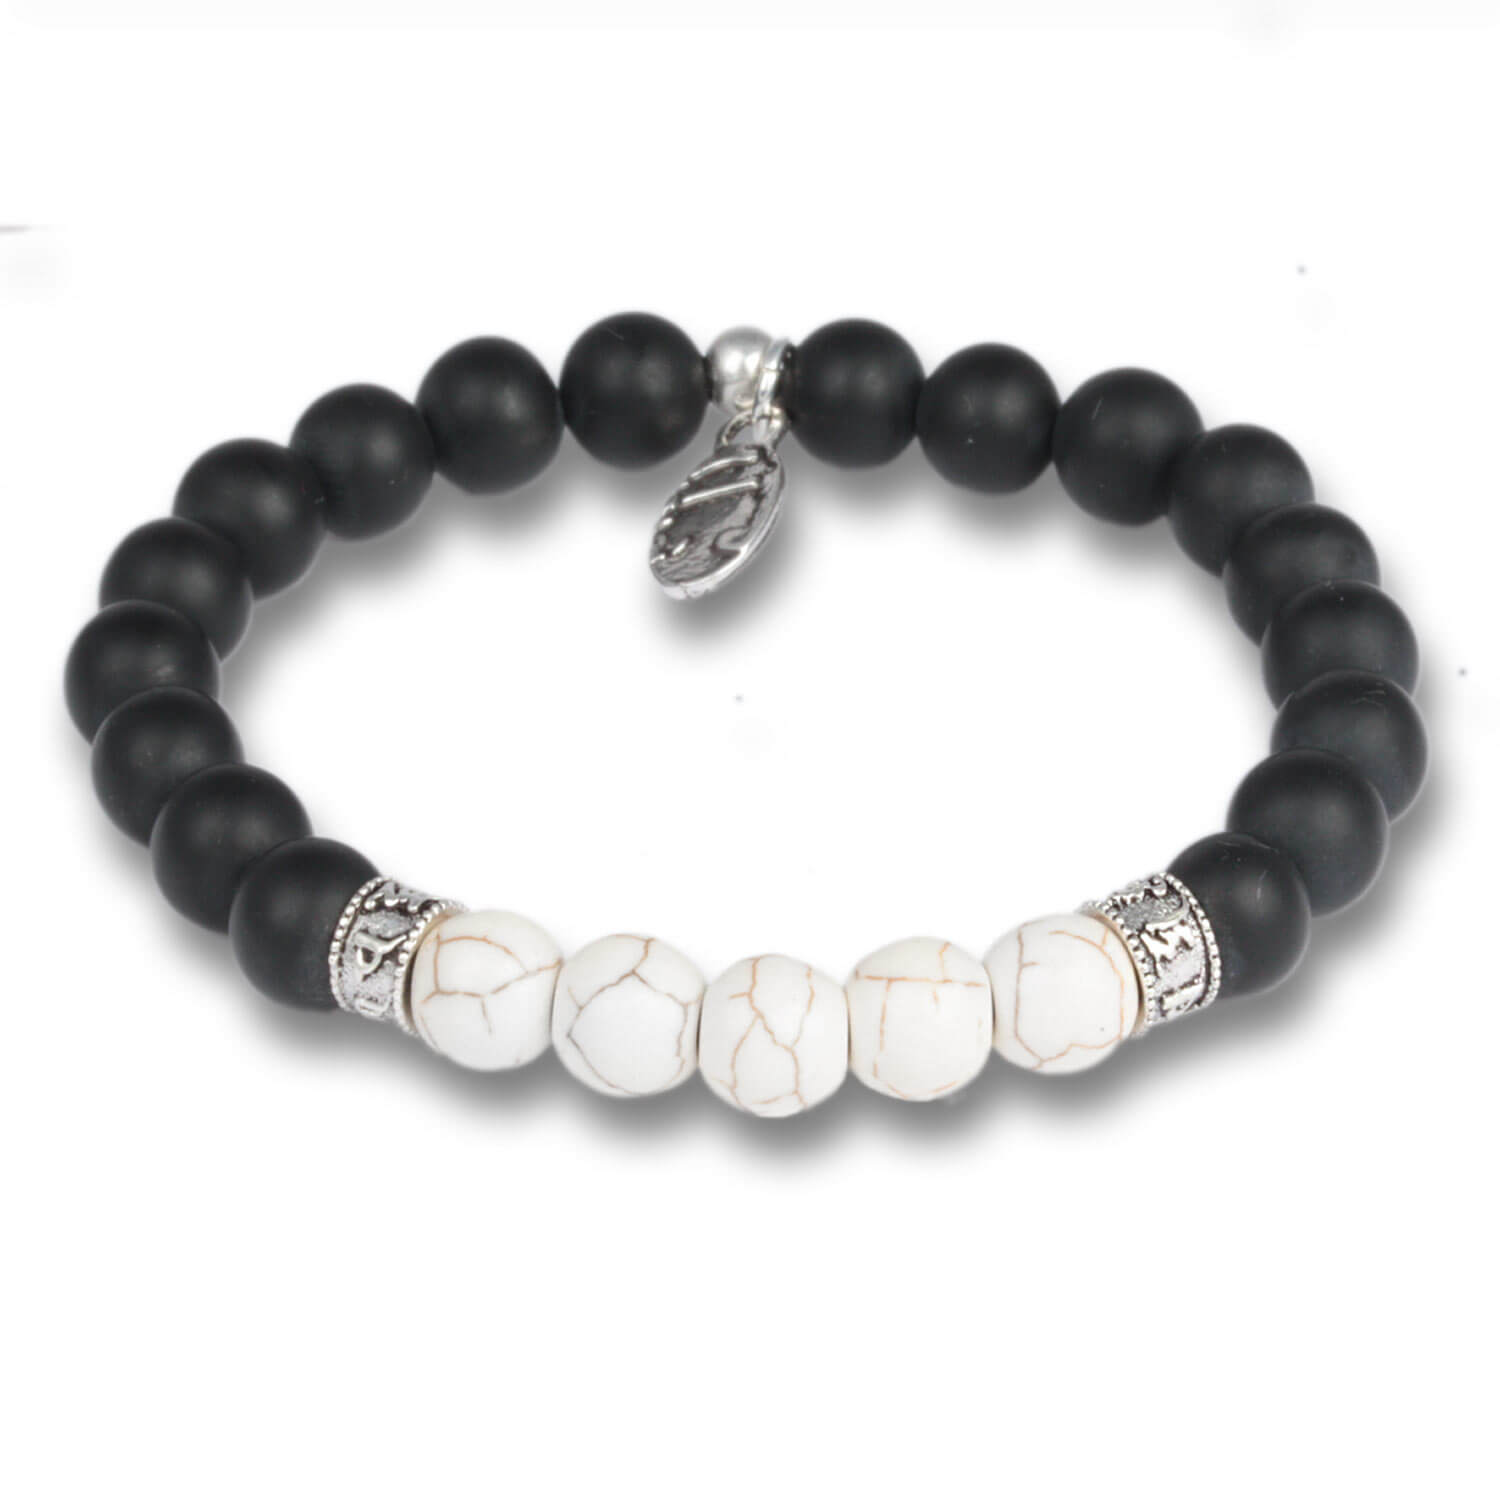 Magnesit - Mantra Beads gemstone bracelet for men with sterling silver, 8 mm